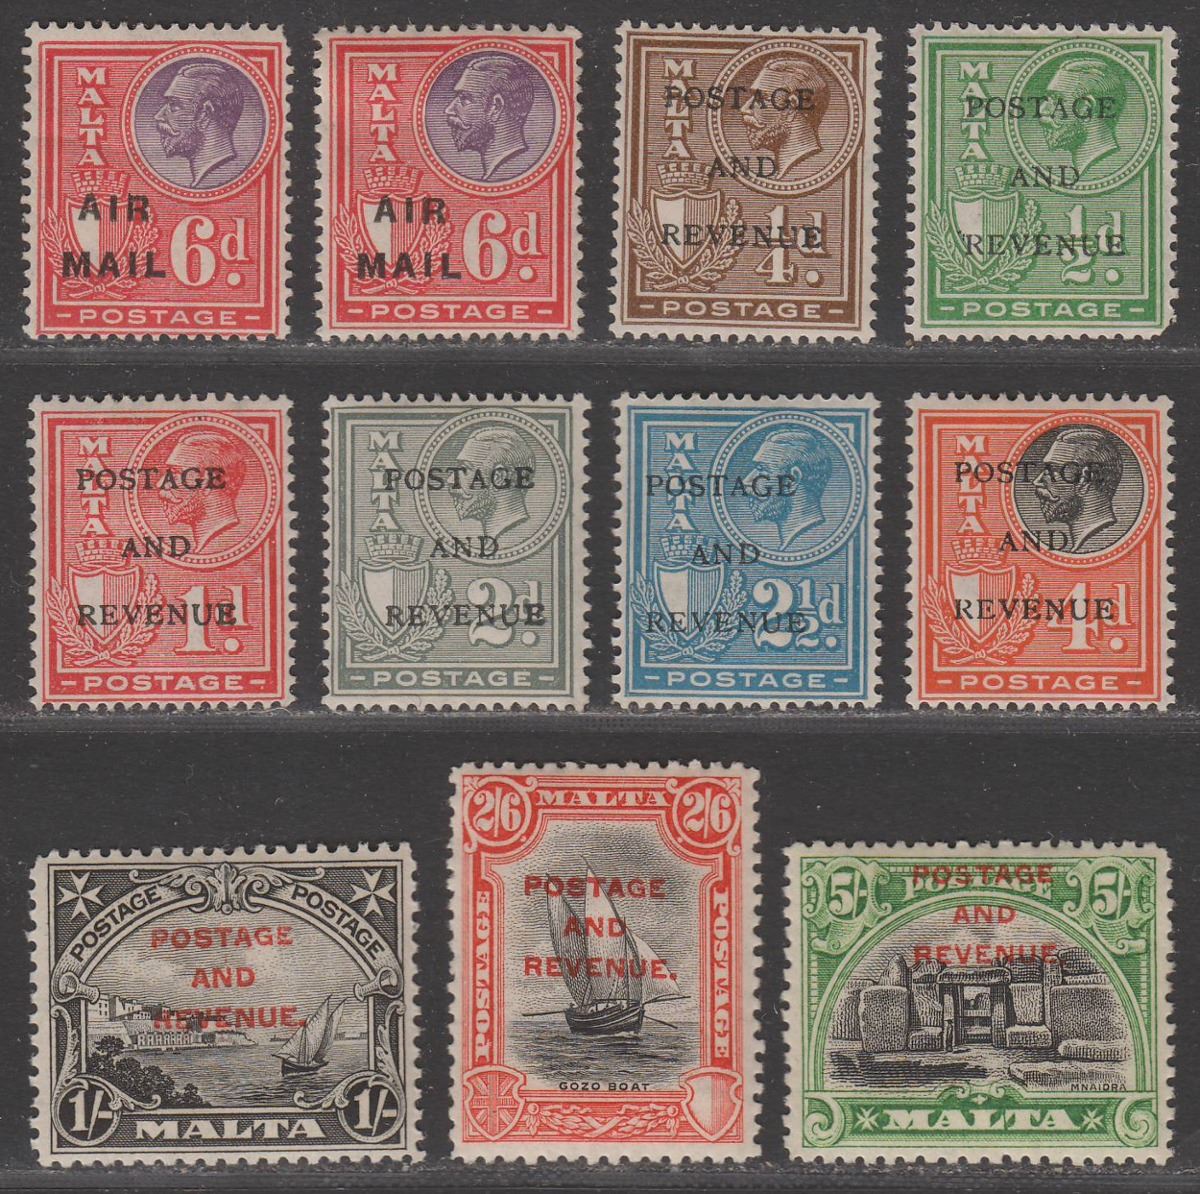 Malta 1928 KGV Postage and Revenue Overprint Part Set to 5sh Mint